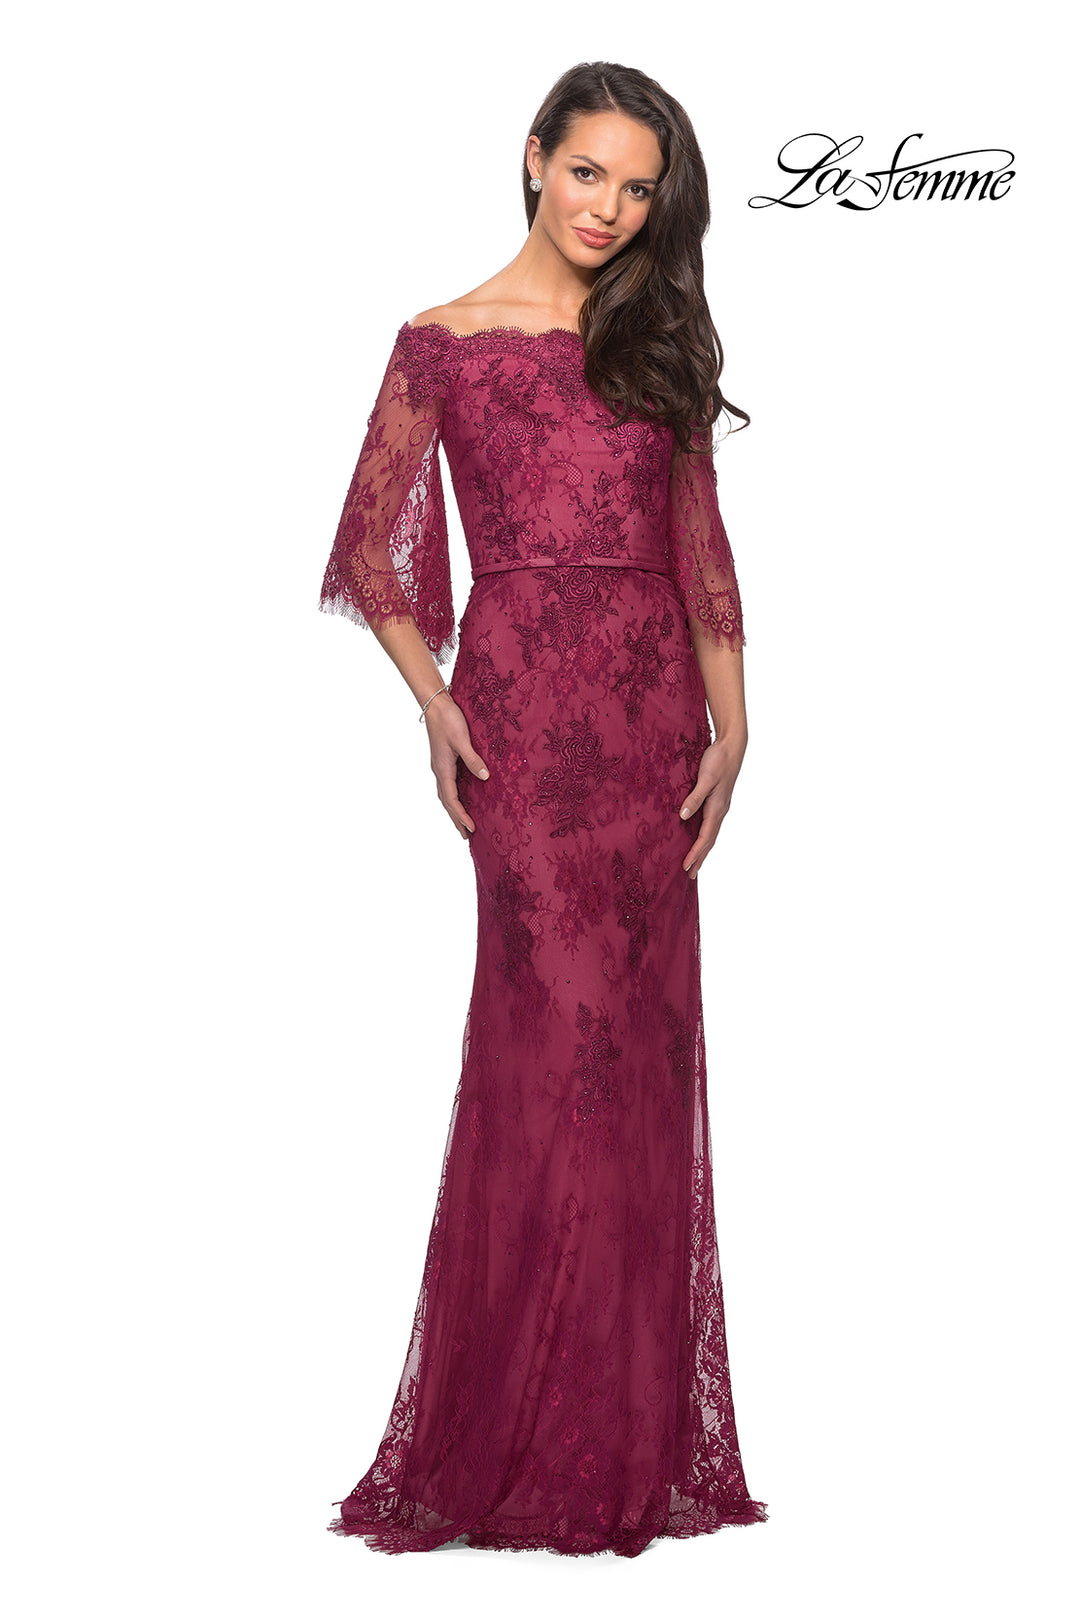 La Femme Lace Formal Gown Style 25317 Size 8